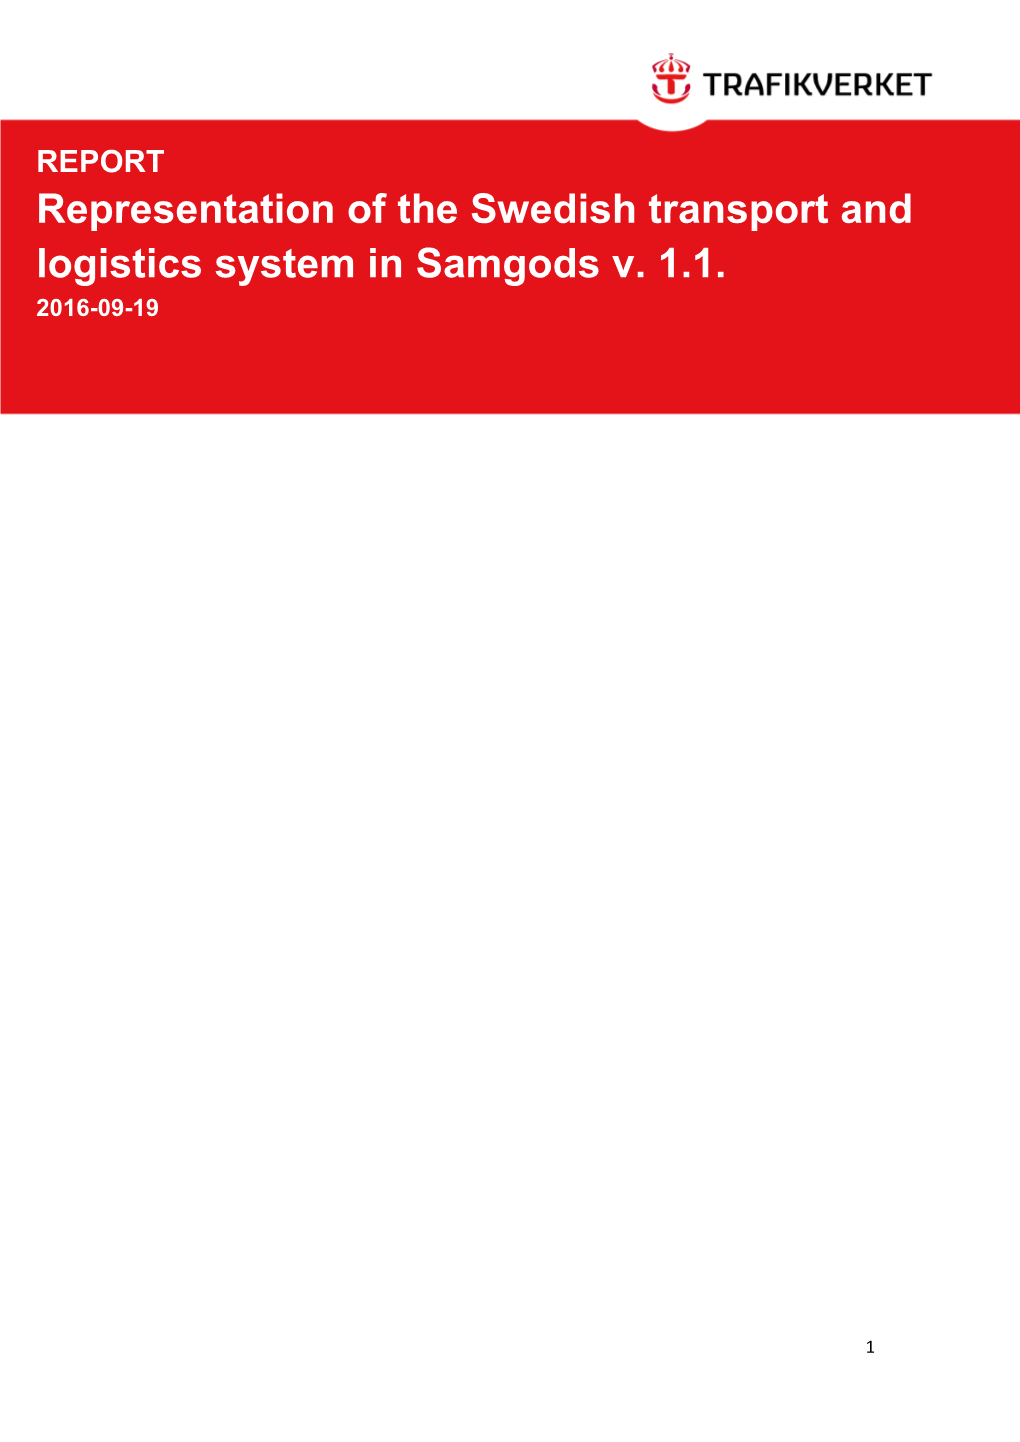 Representation of the Swedish Transport and Logistics System in Samgods V